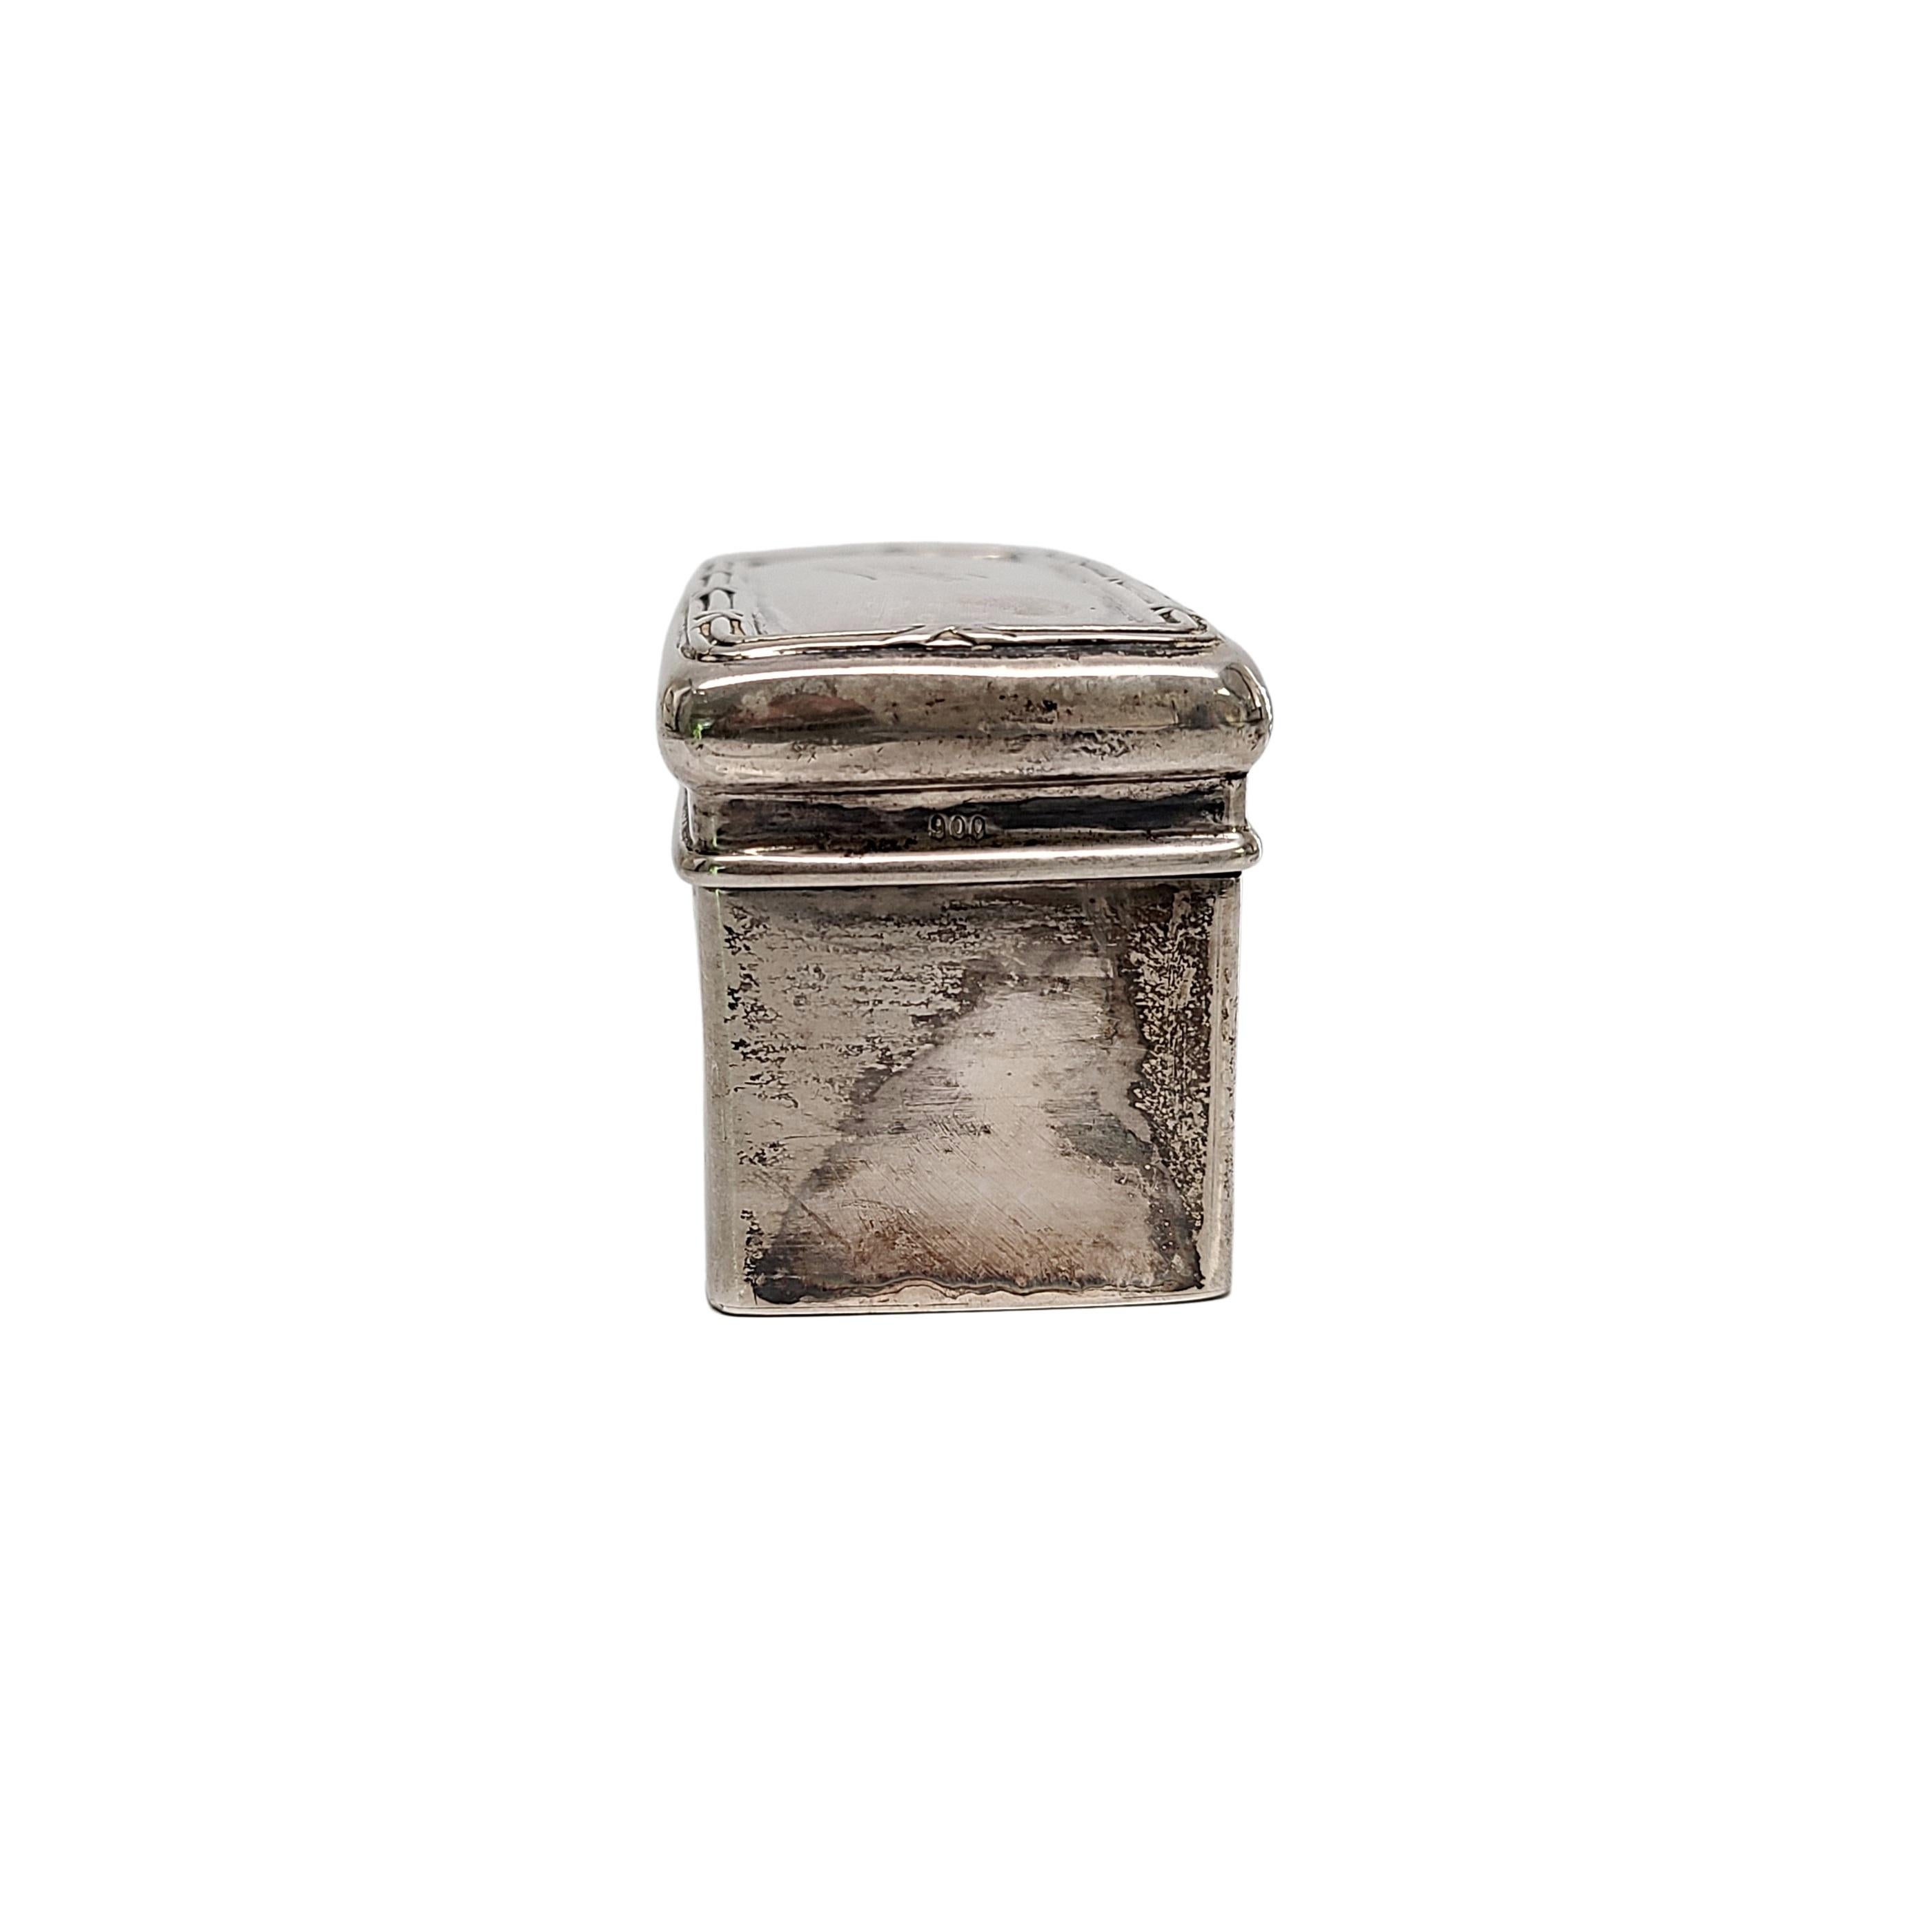 engraved silver trinket box